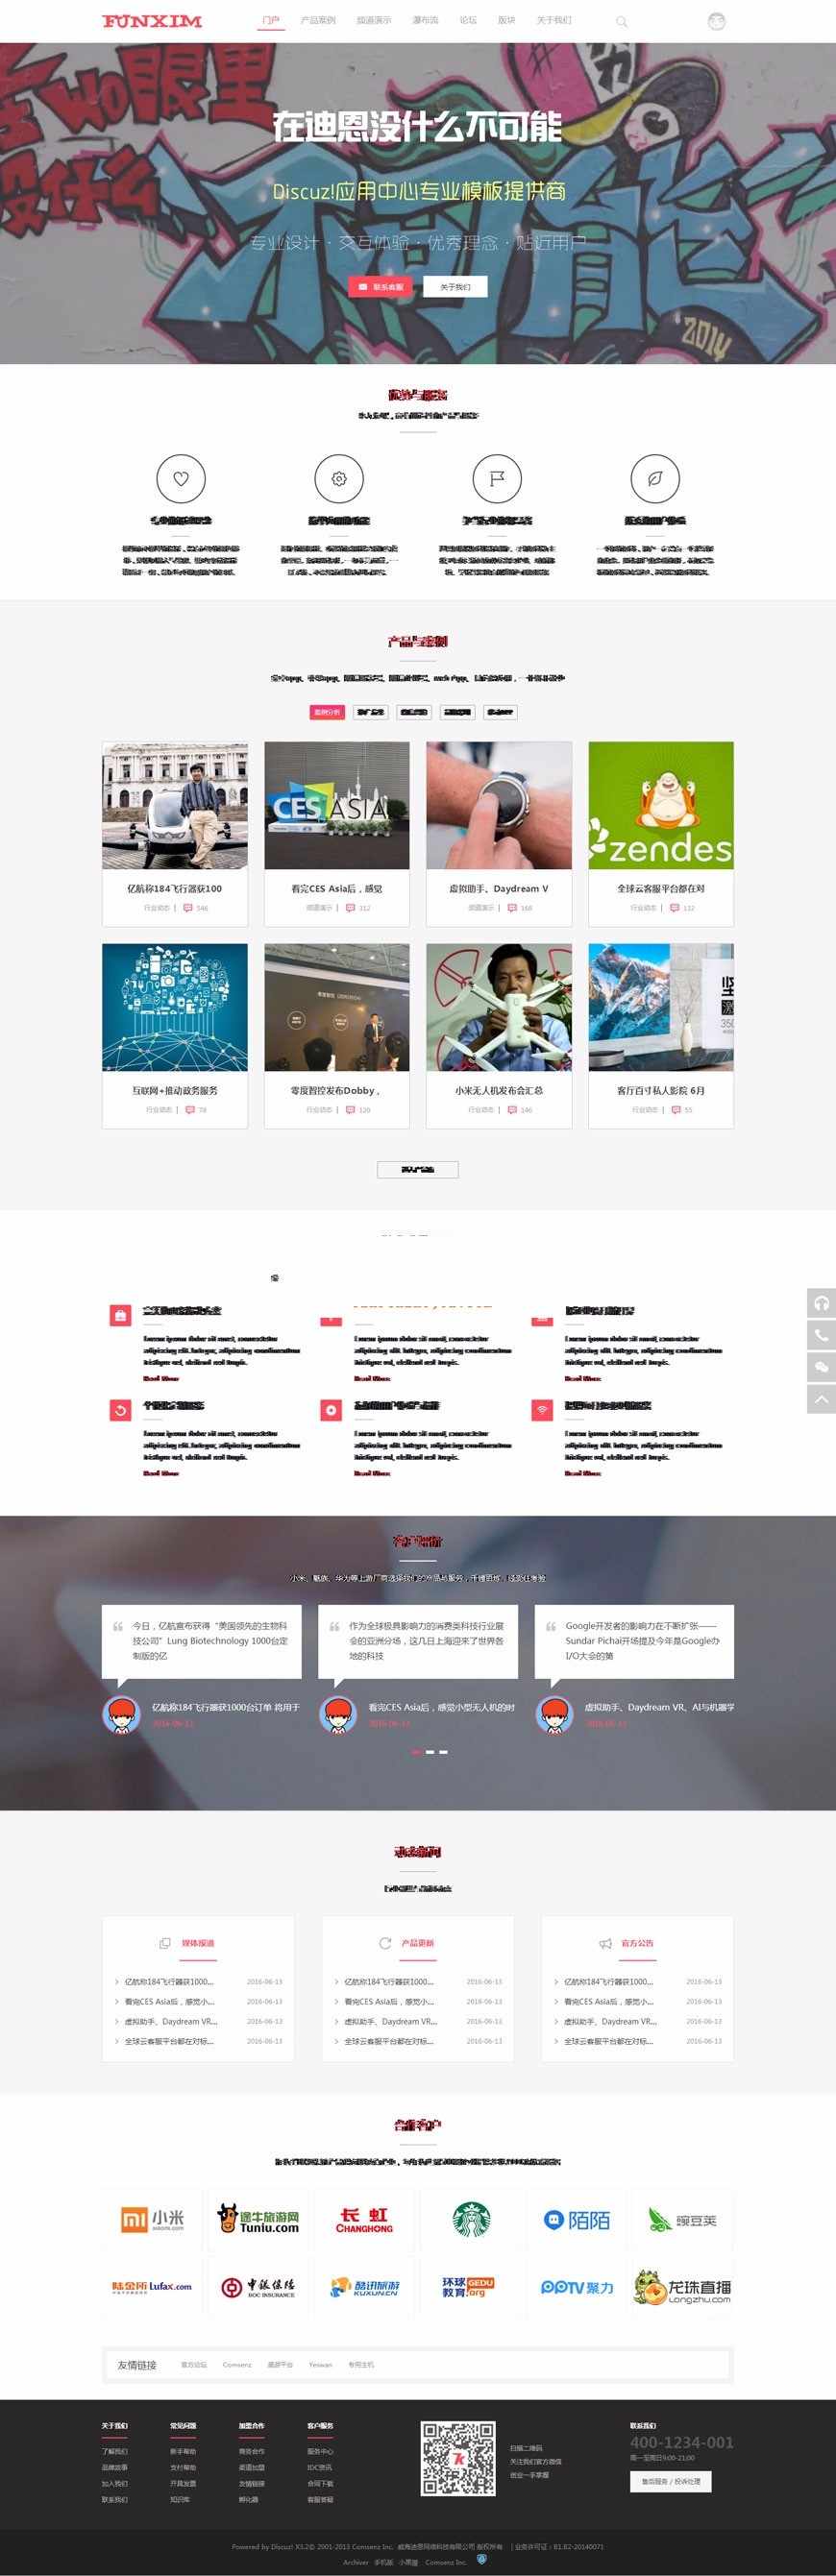 Discuz模板 仿迪恩 产品营销案例展示企业网站主题 商业版 GBK